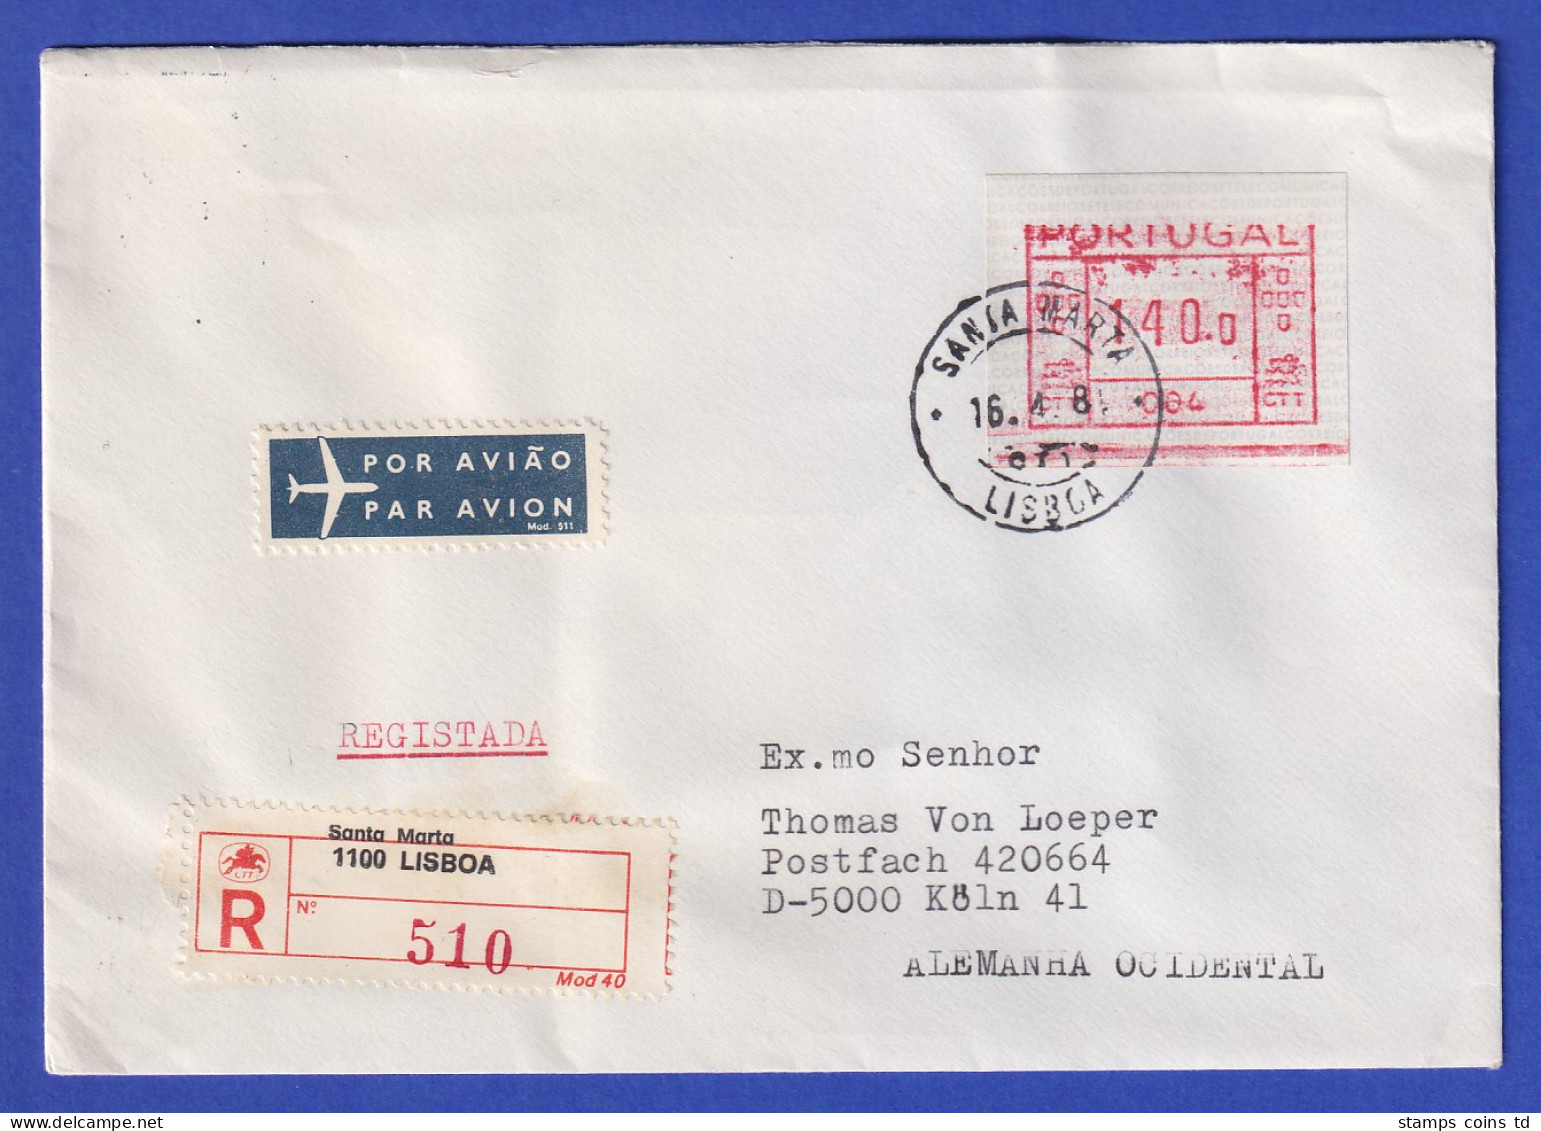 Portugal Frama-ATM 1981 Aut.-Nr. 004  R-Brief Mit ATM Vom OA, Orts-Stempel - Machine Labels [ATM]